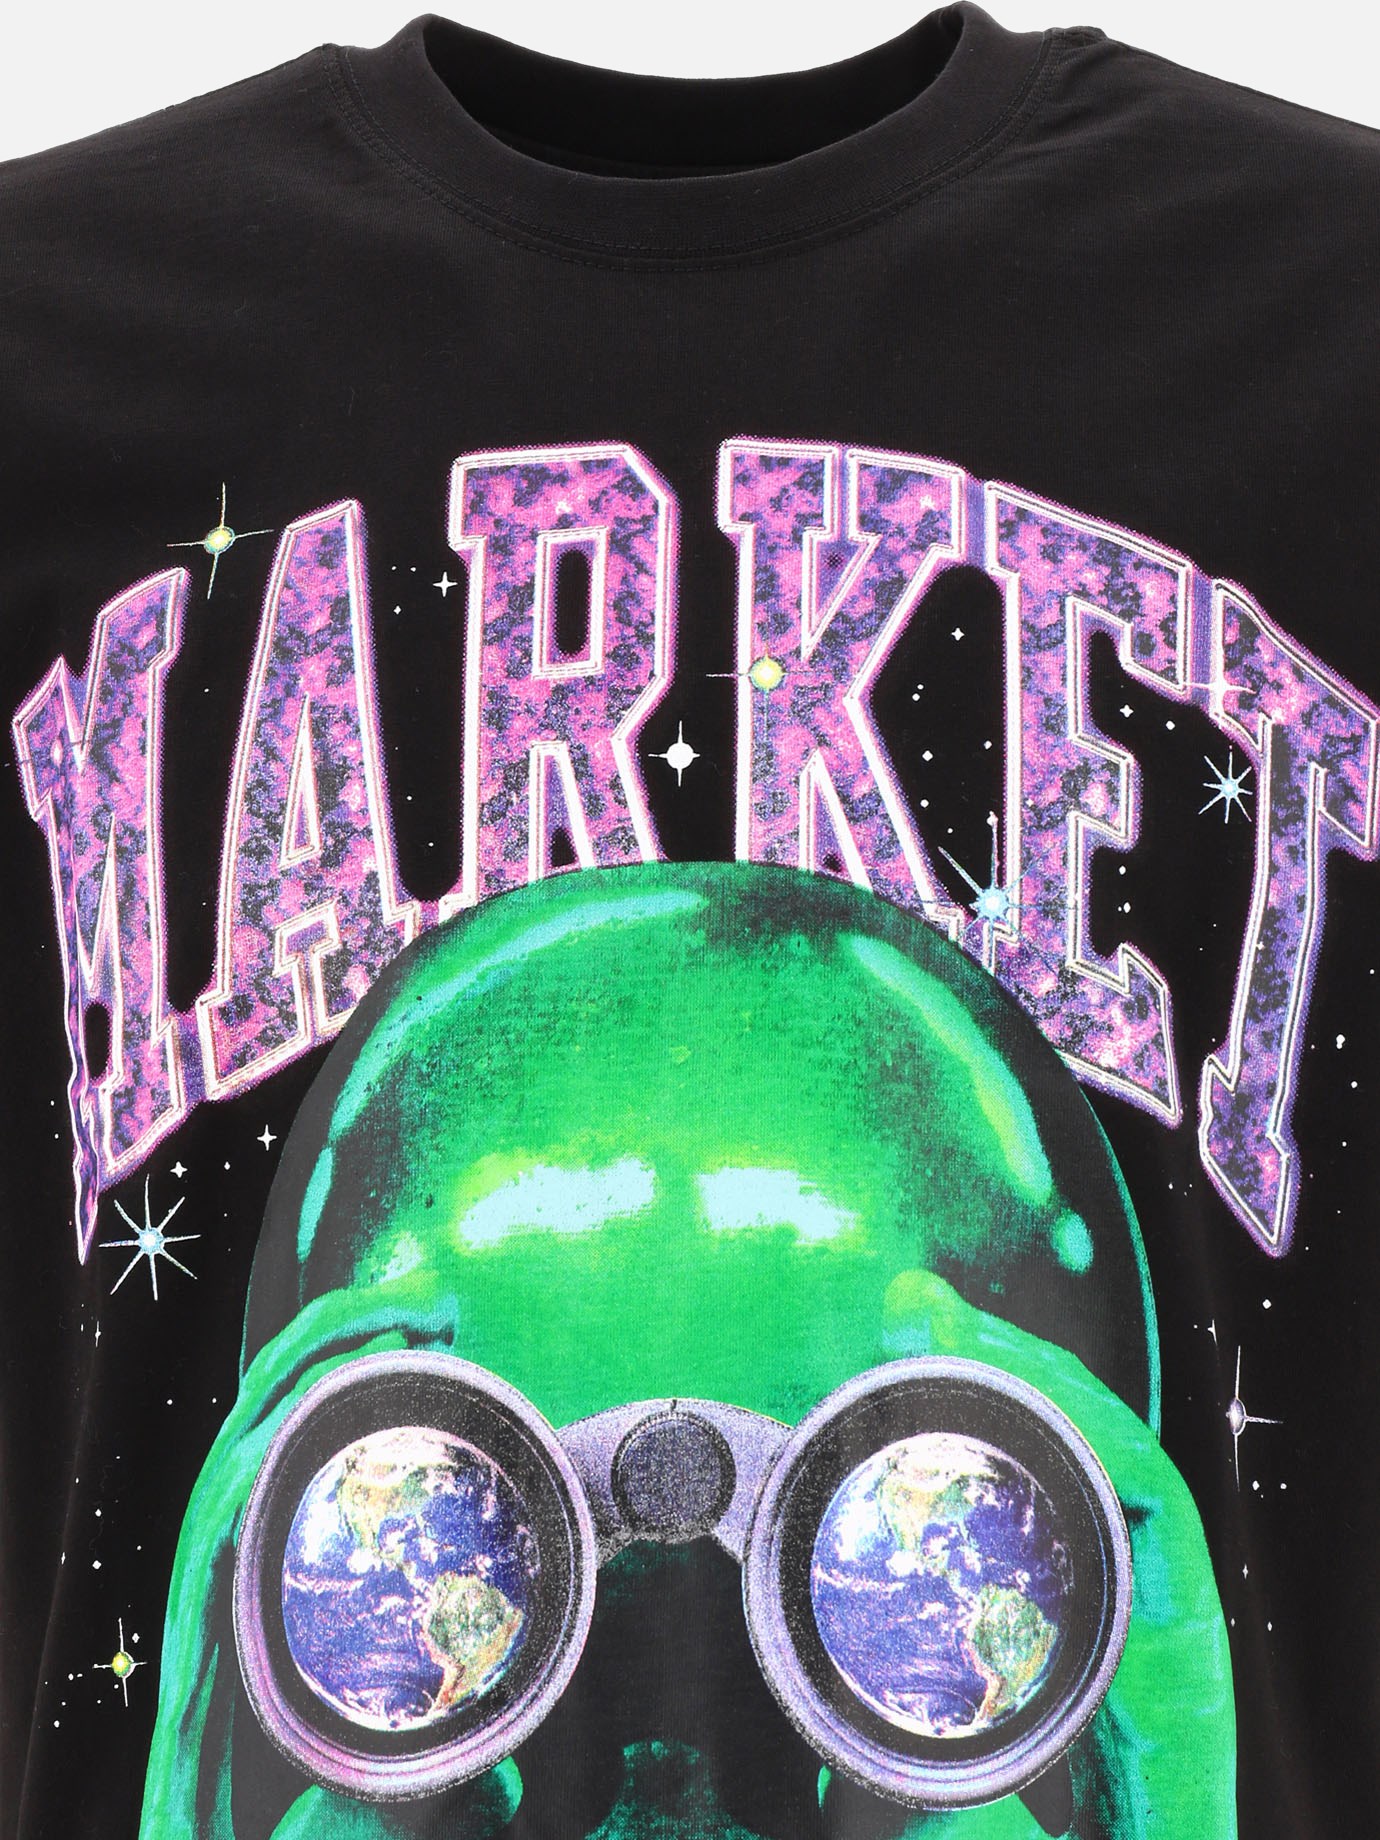  Alien Sightseeing  t-shirt by Market